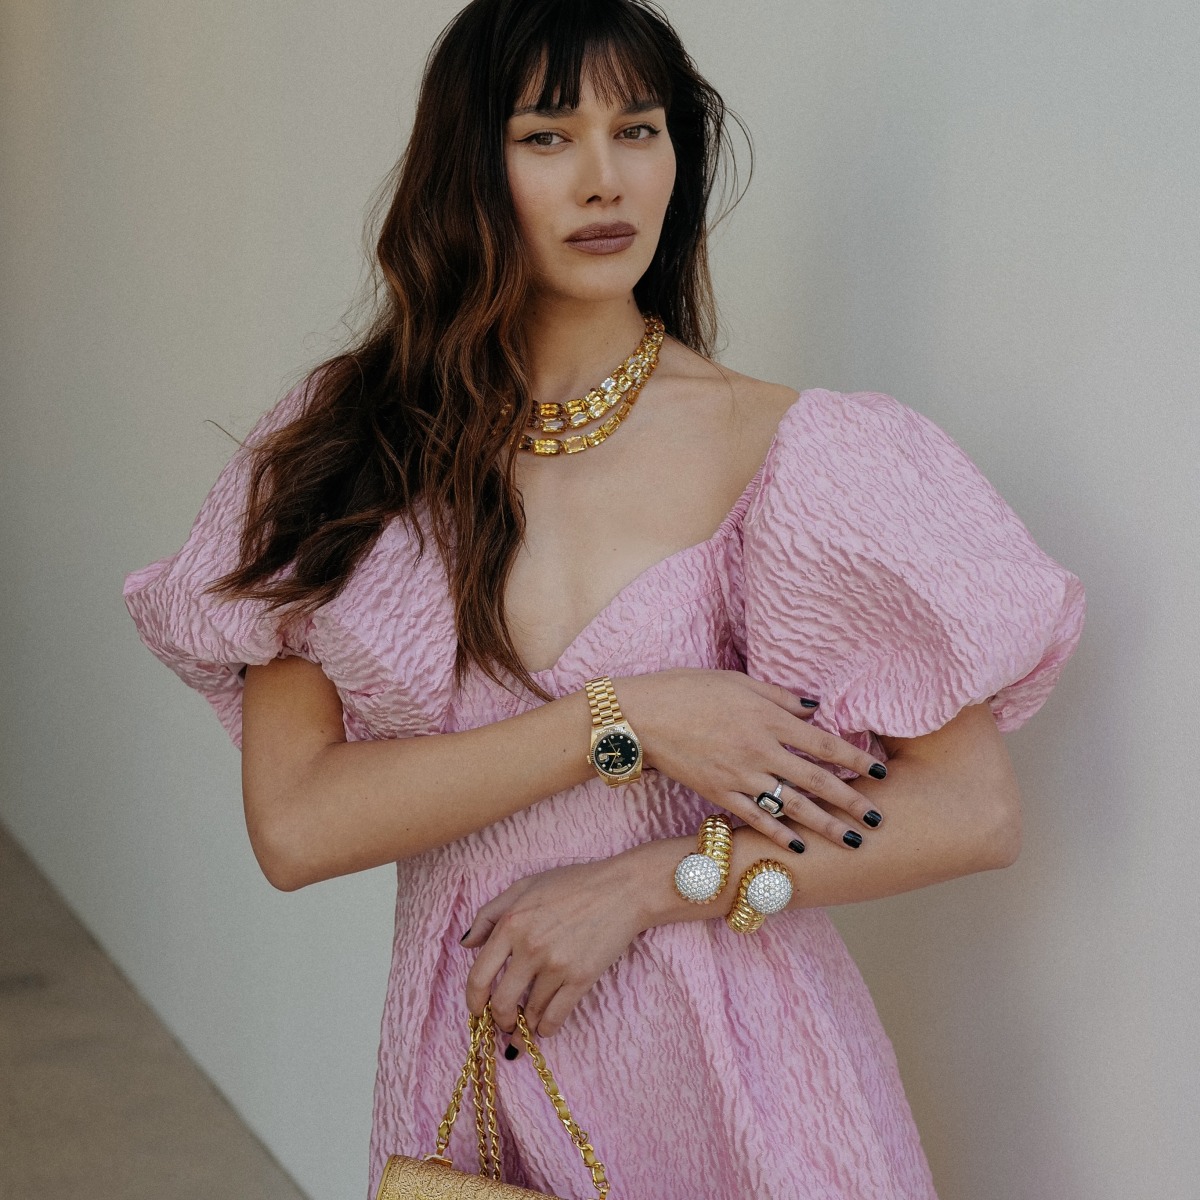 NATALIE OFF DUTY - The unique perspective of NYC model Natalie Lim Suarez